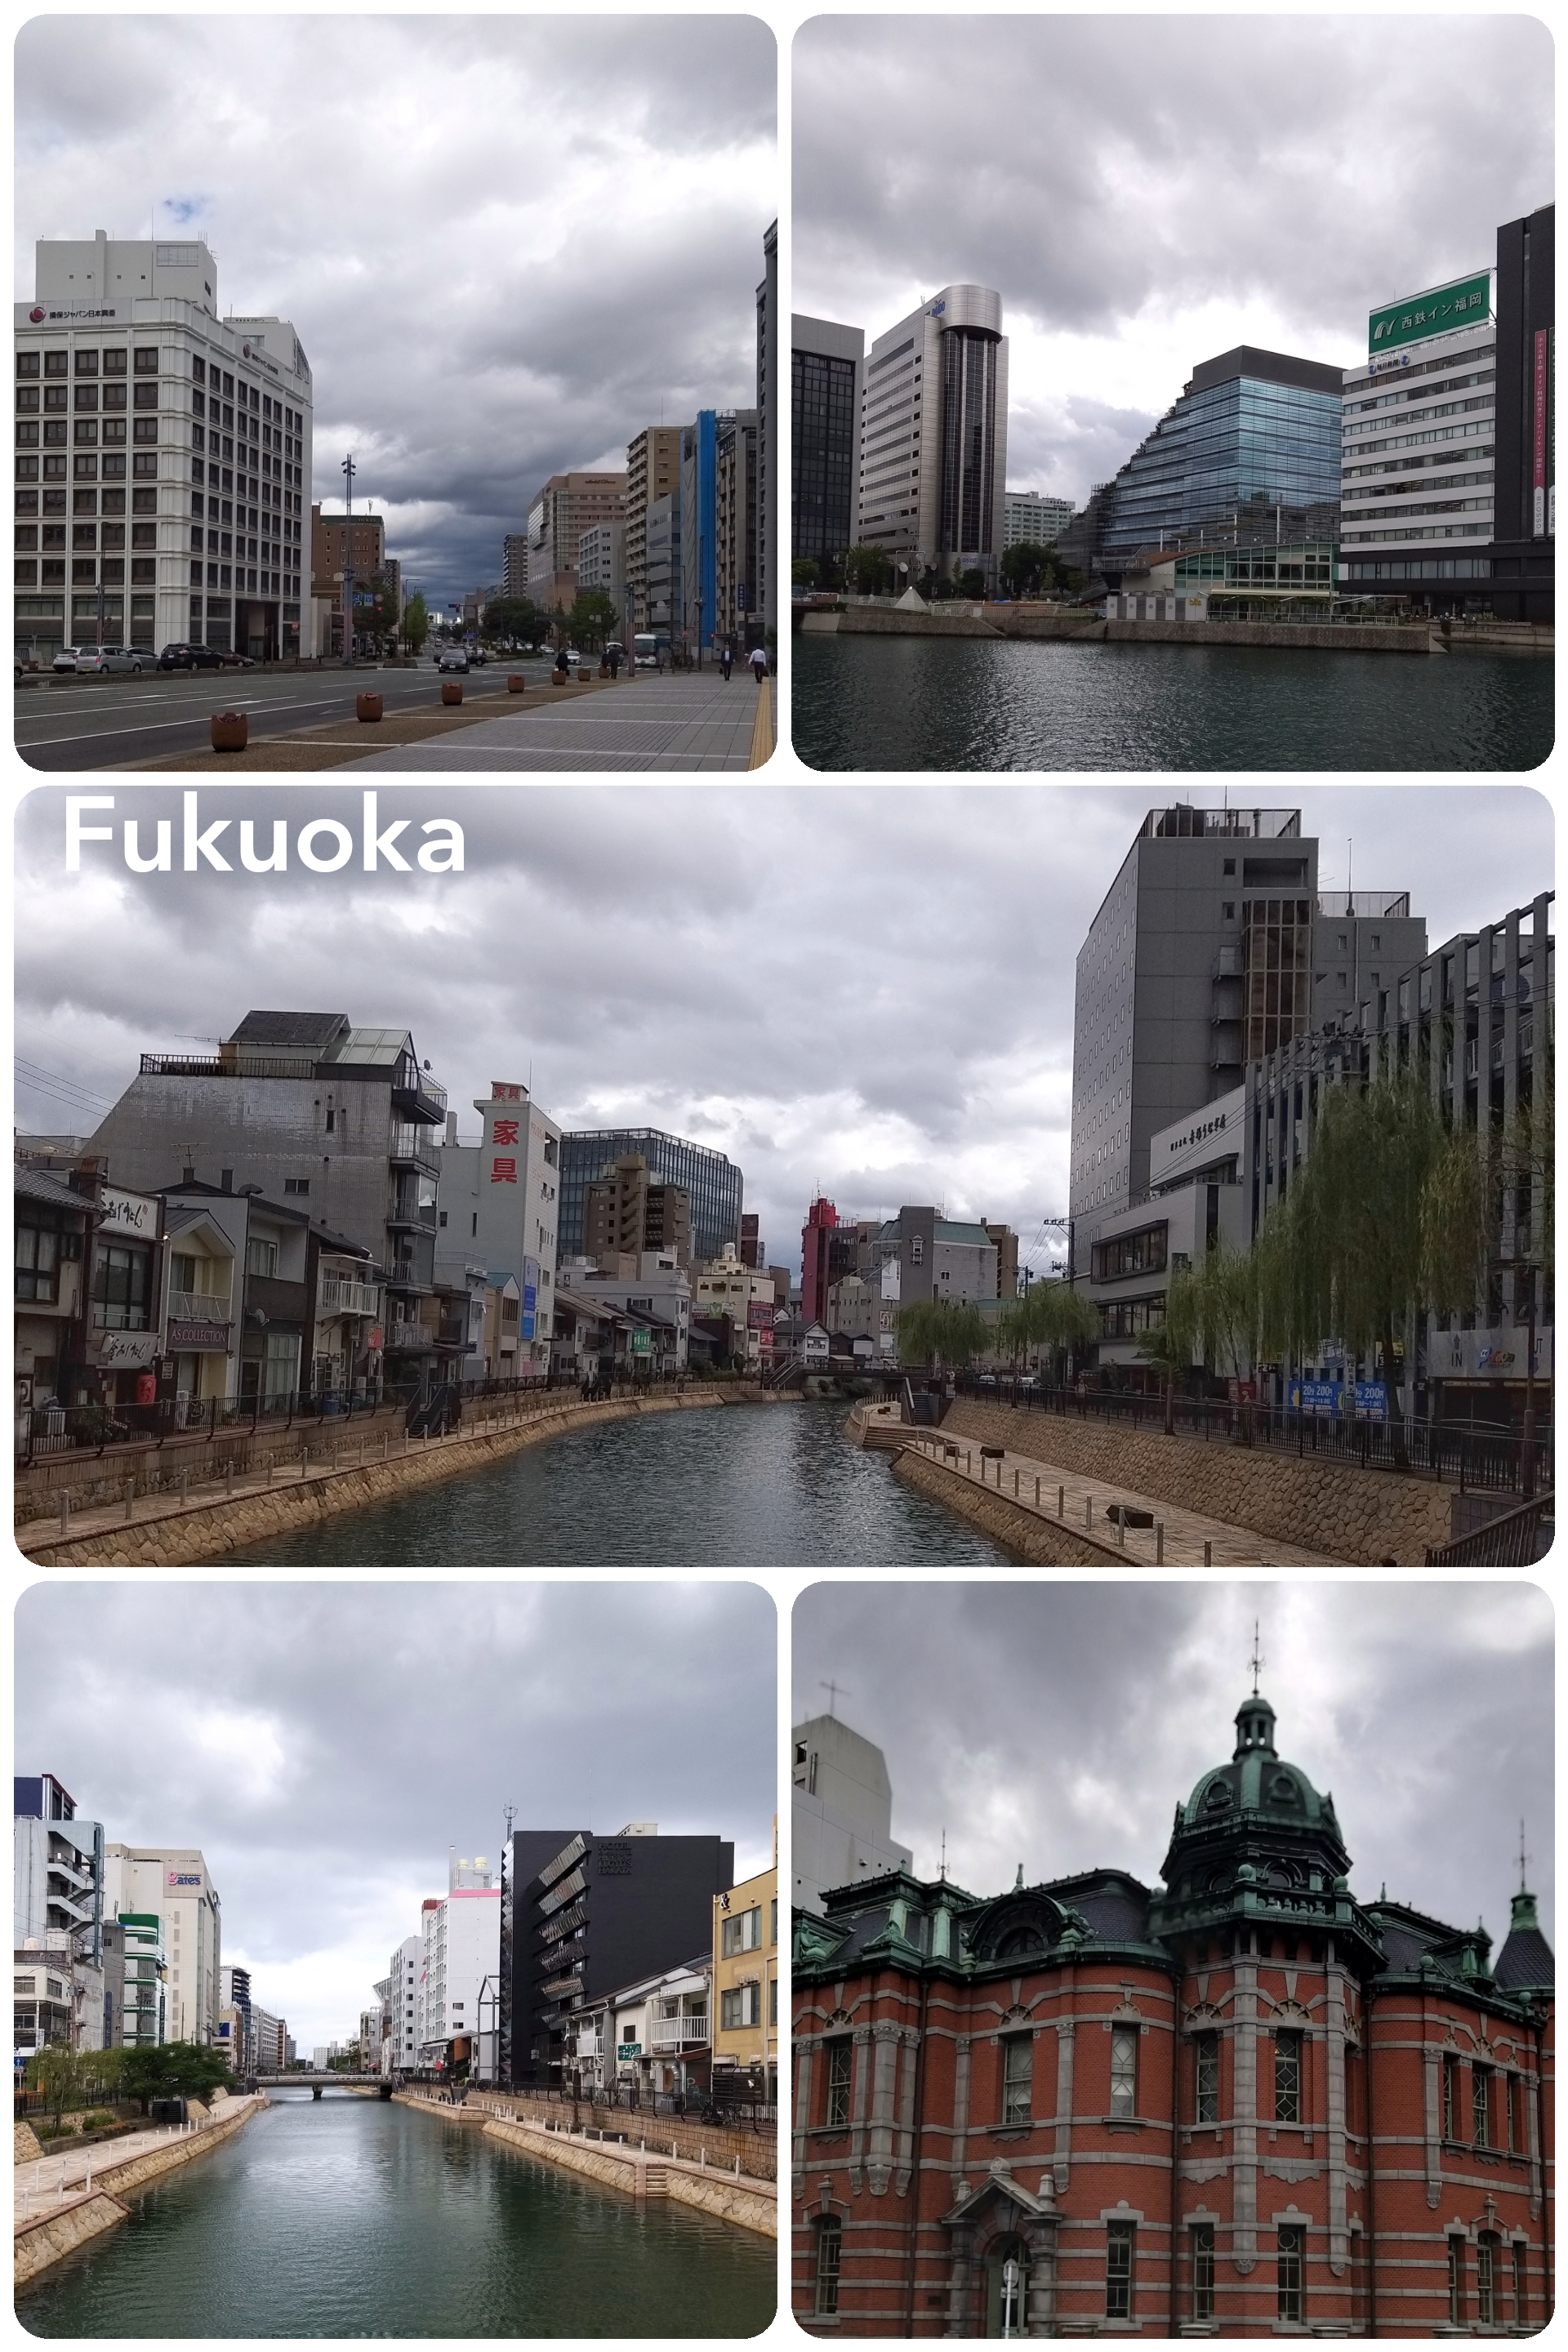 Fukuoka – Le canal